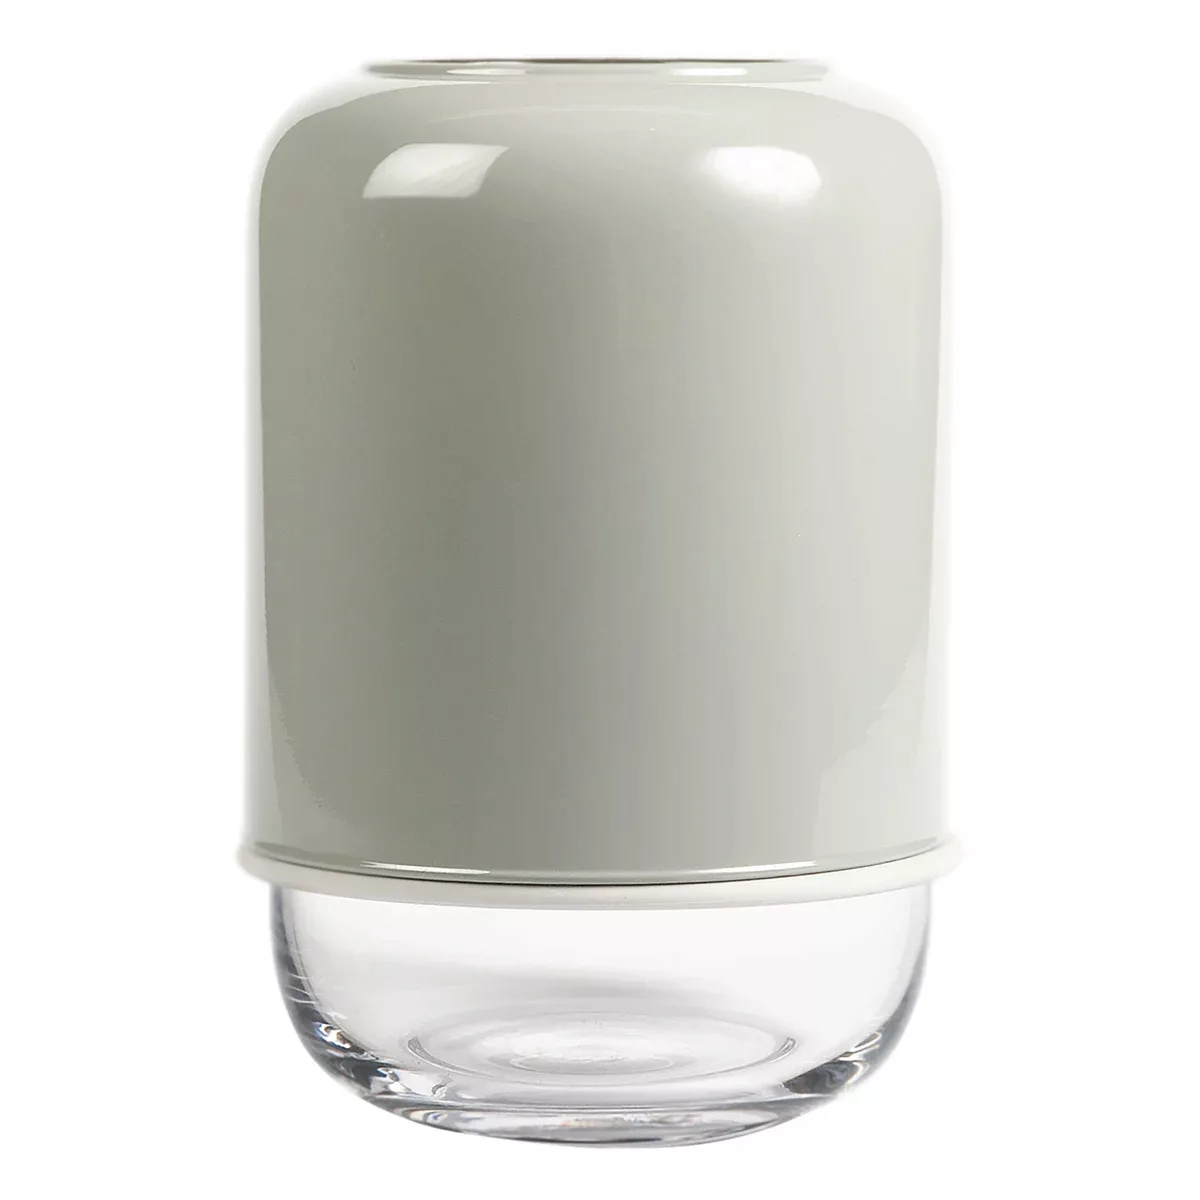 Capsule verstellbare Vase 18-28cm grau-klar günstig online kaufen